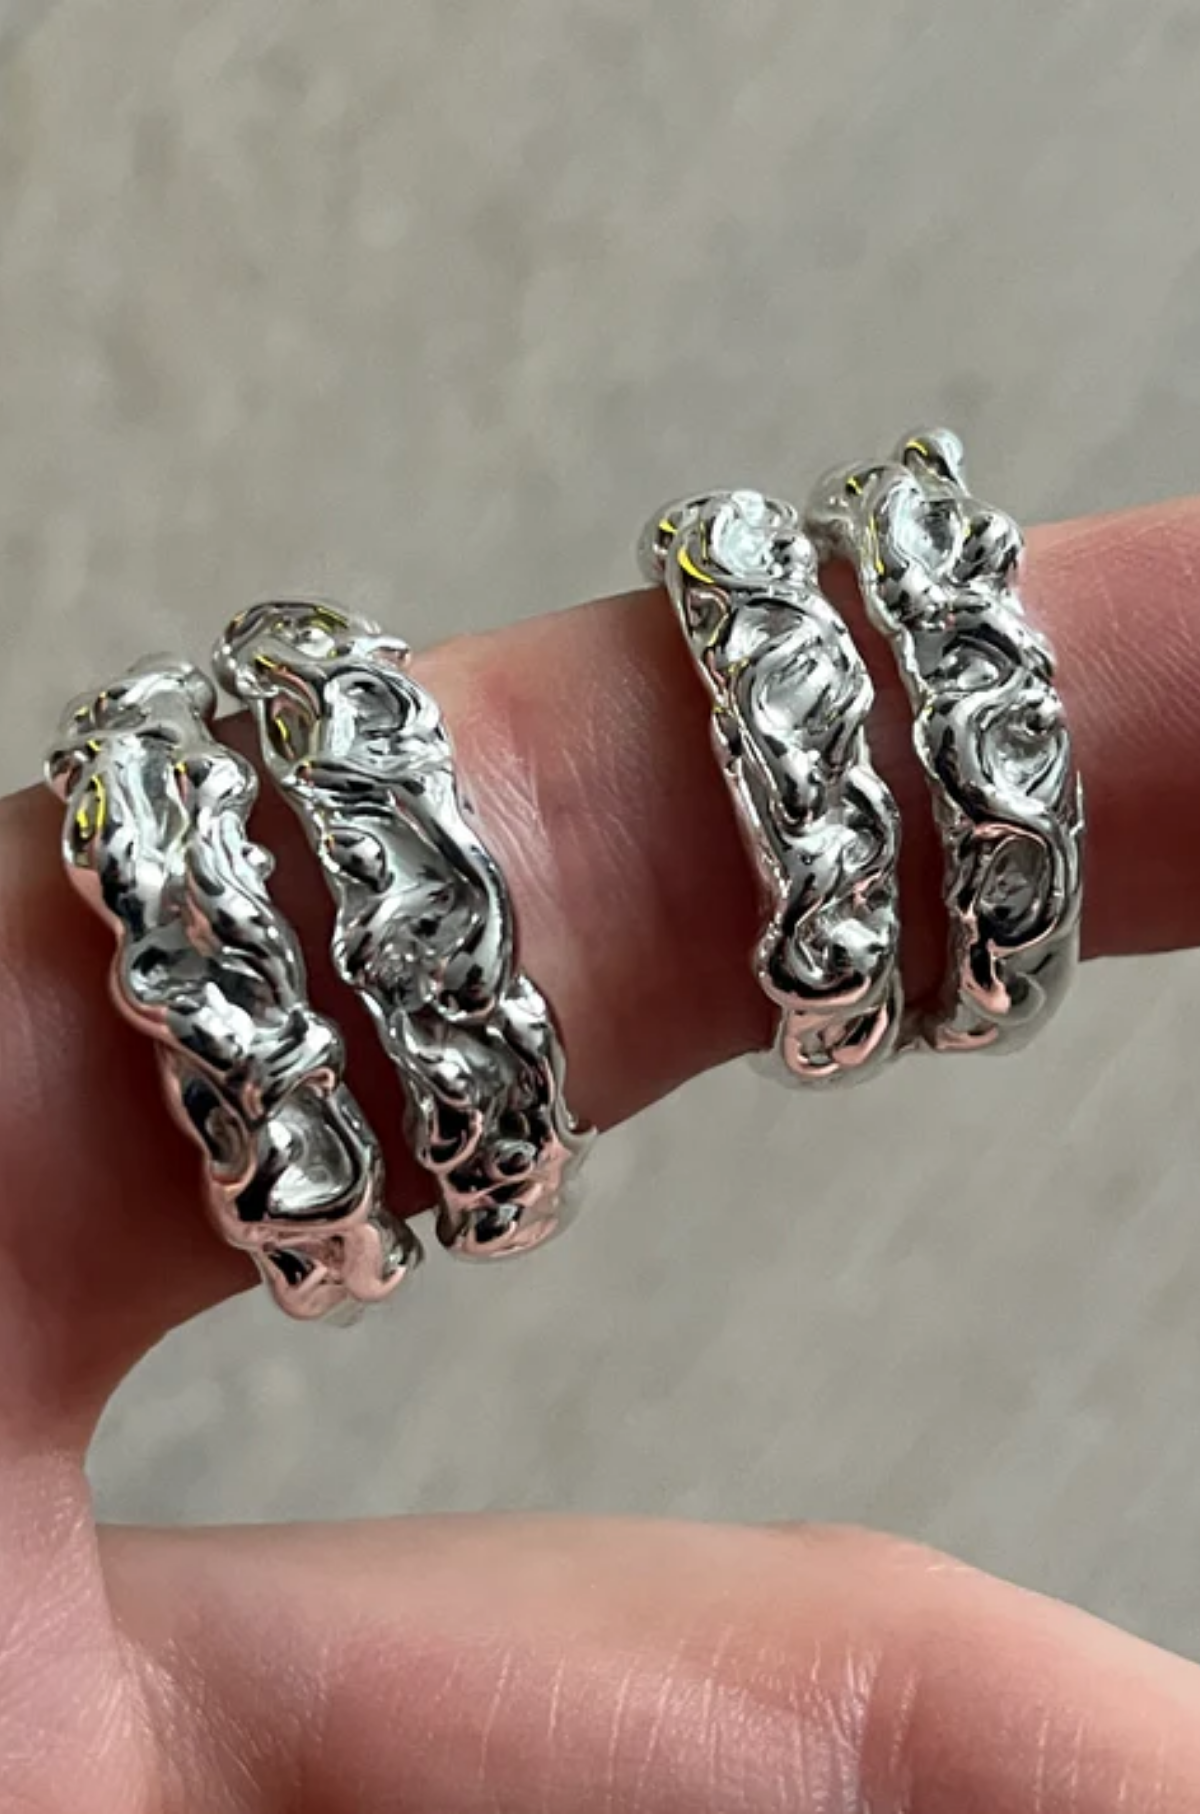 Ursina - Silver Double Circe Ring